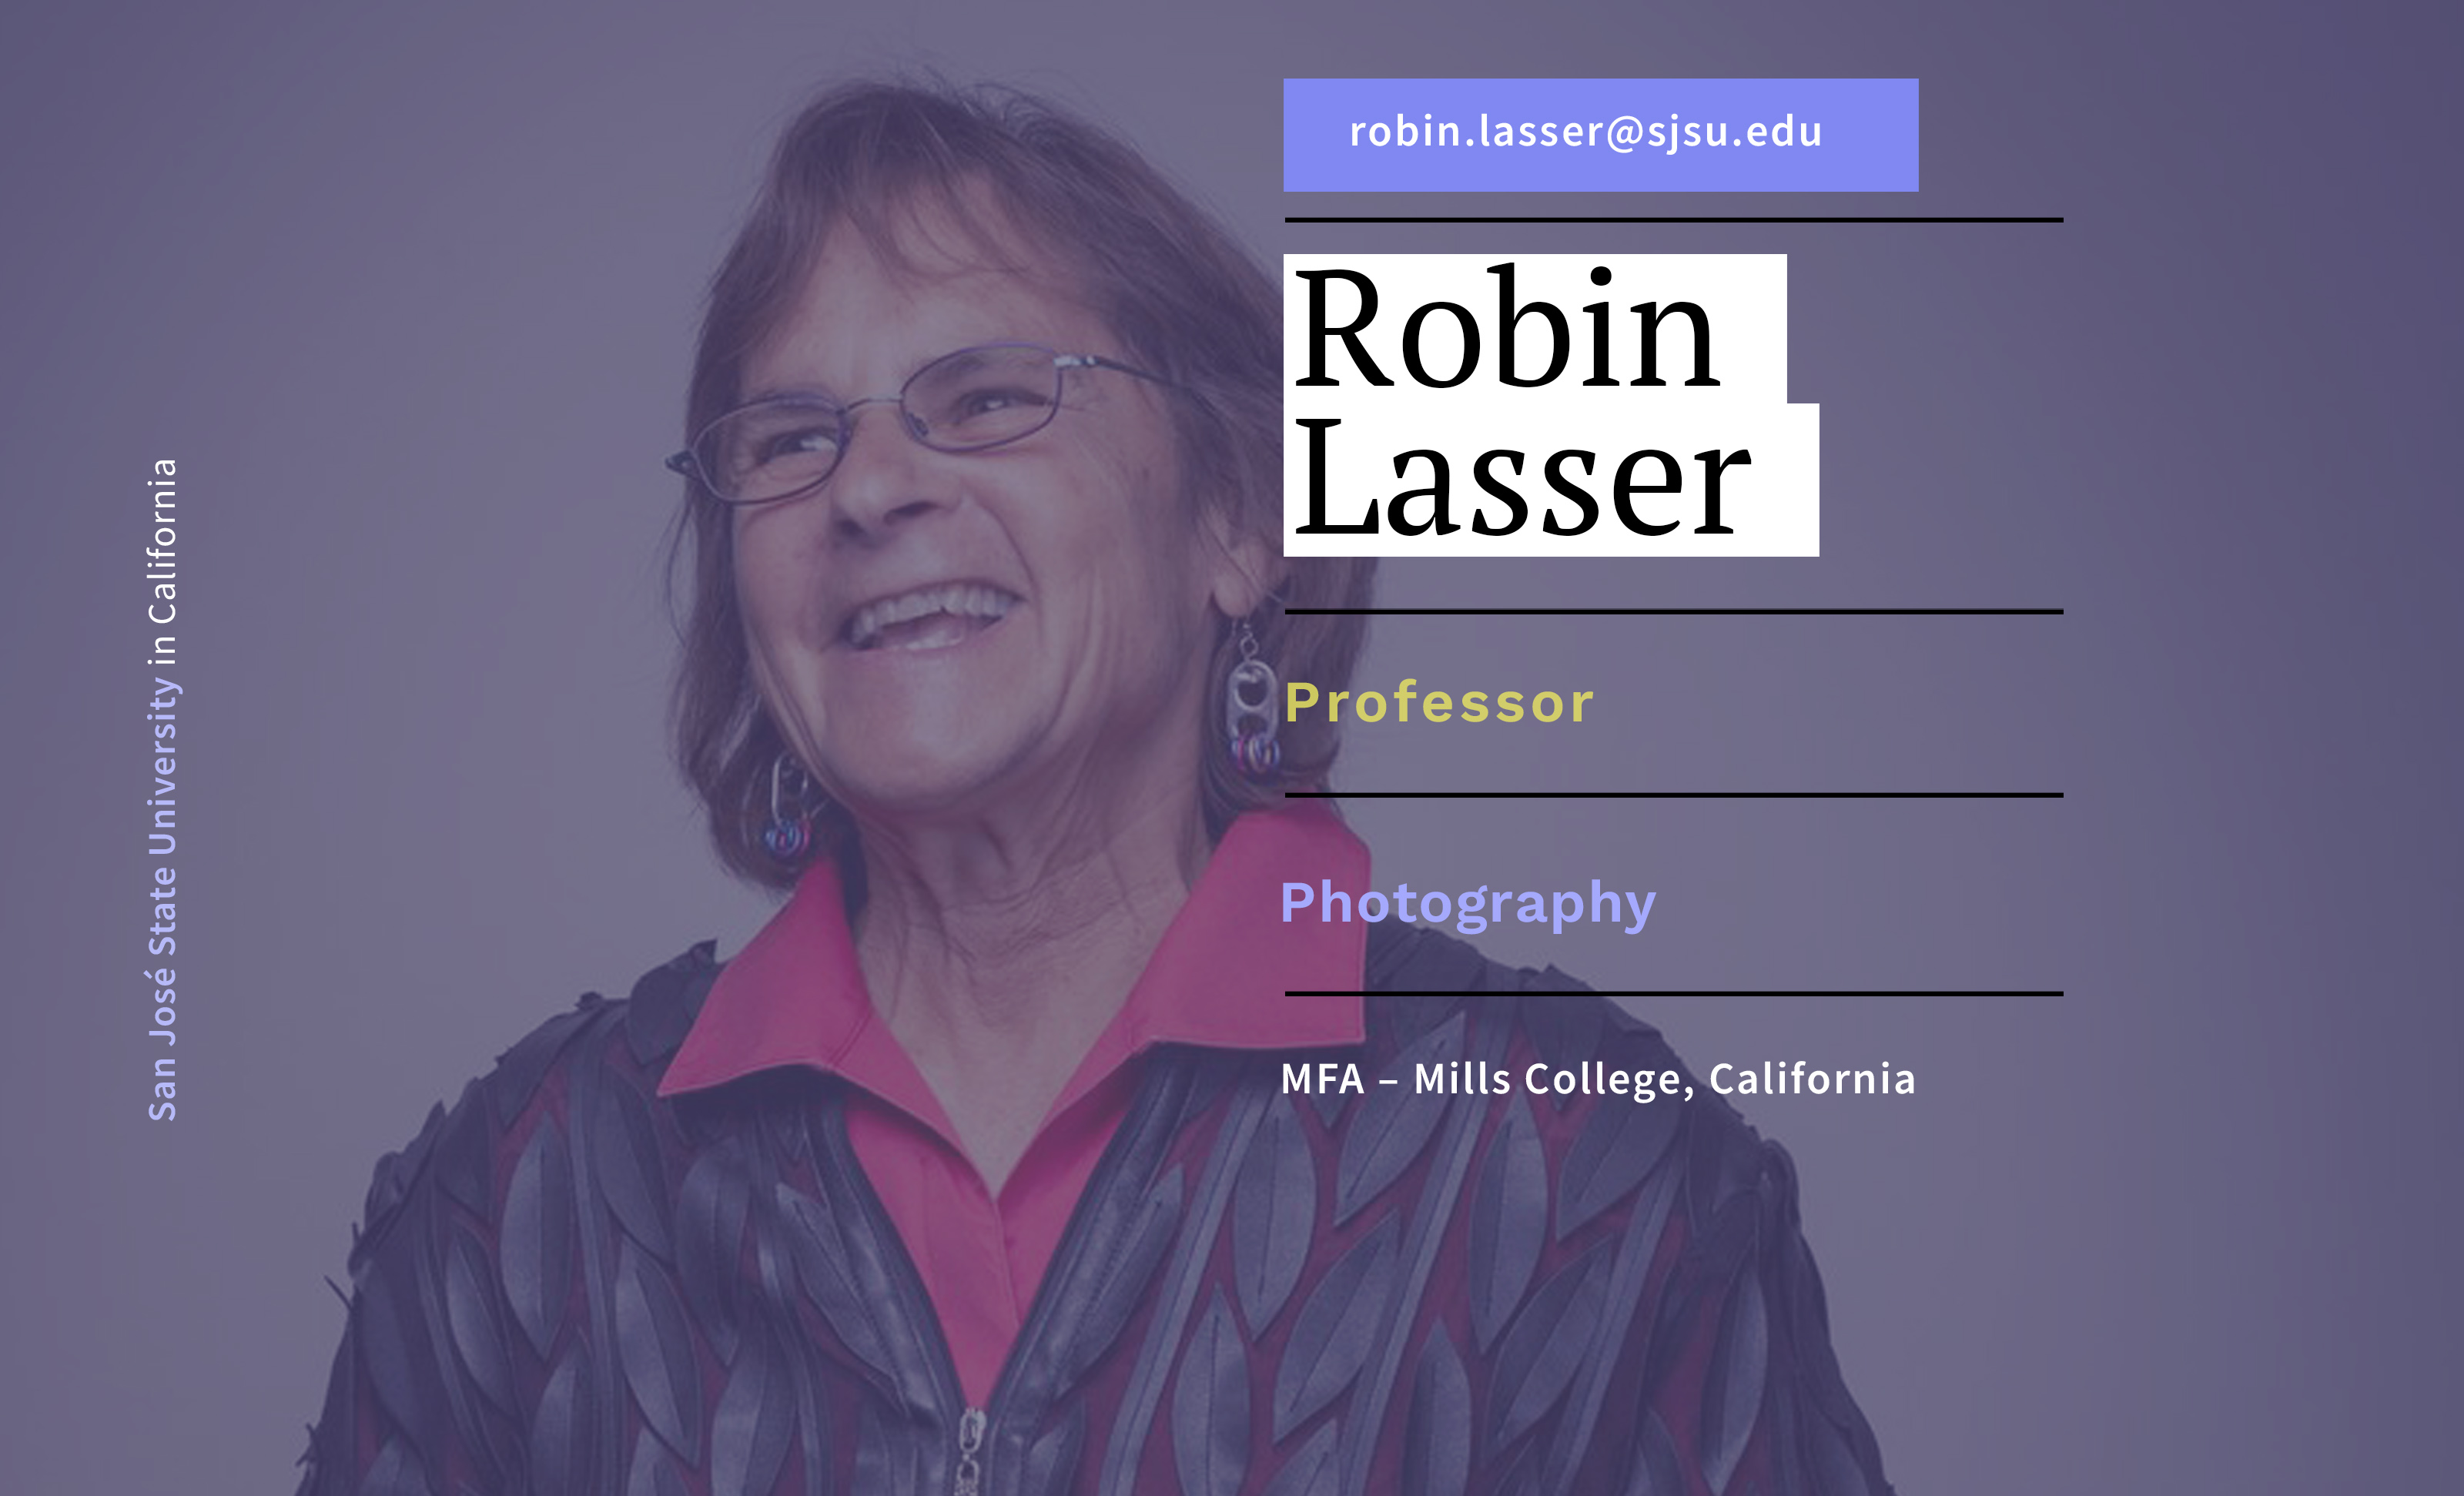 Robin Lasser with a big smile